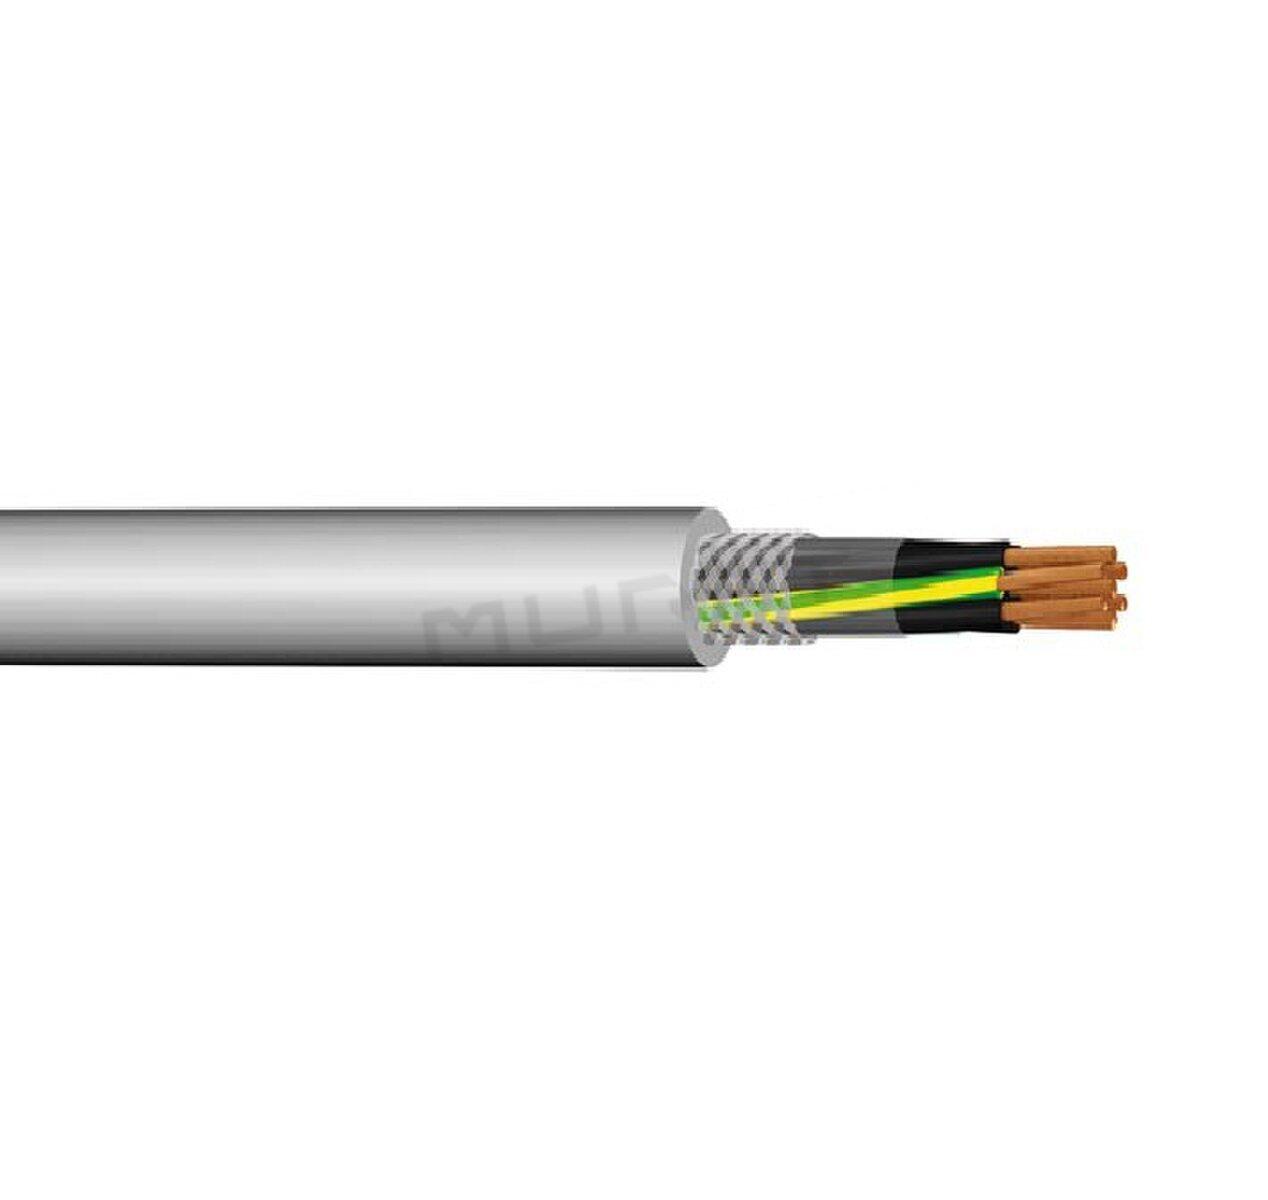 Kábel YSLCY-JZ 3x2,5 mm2